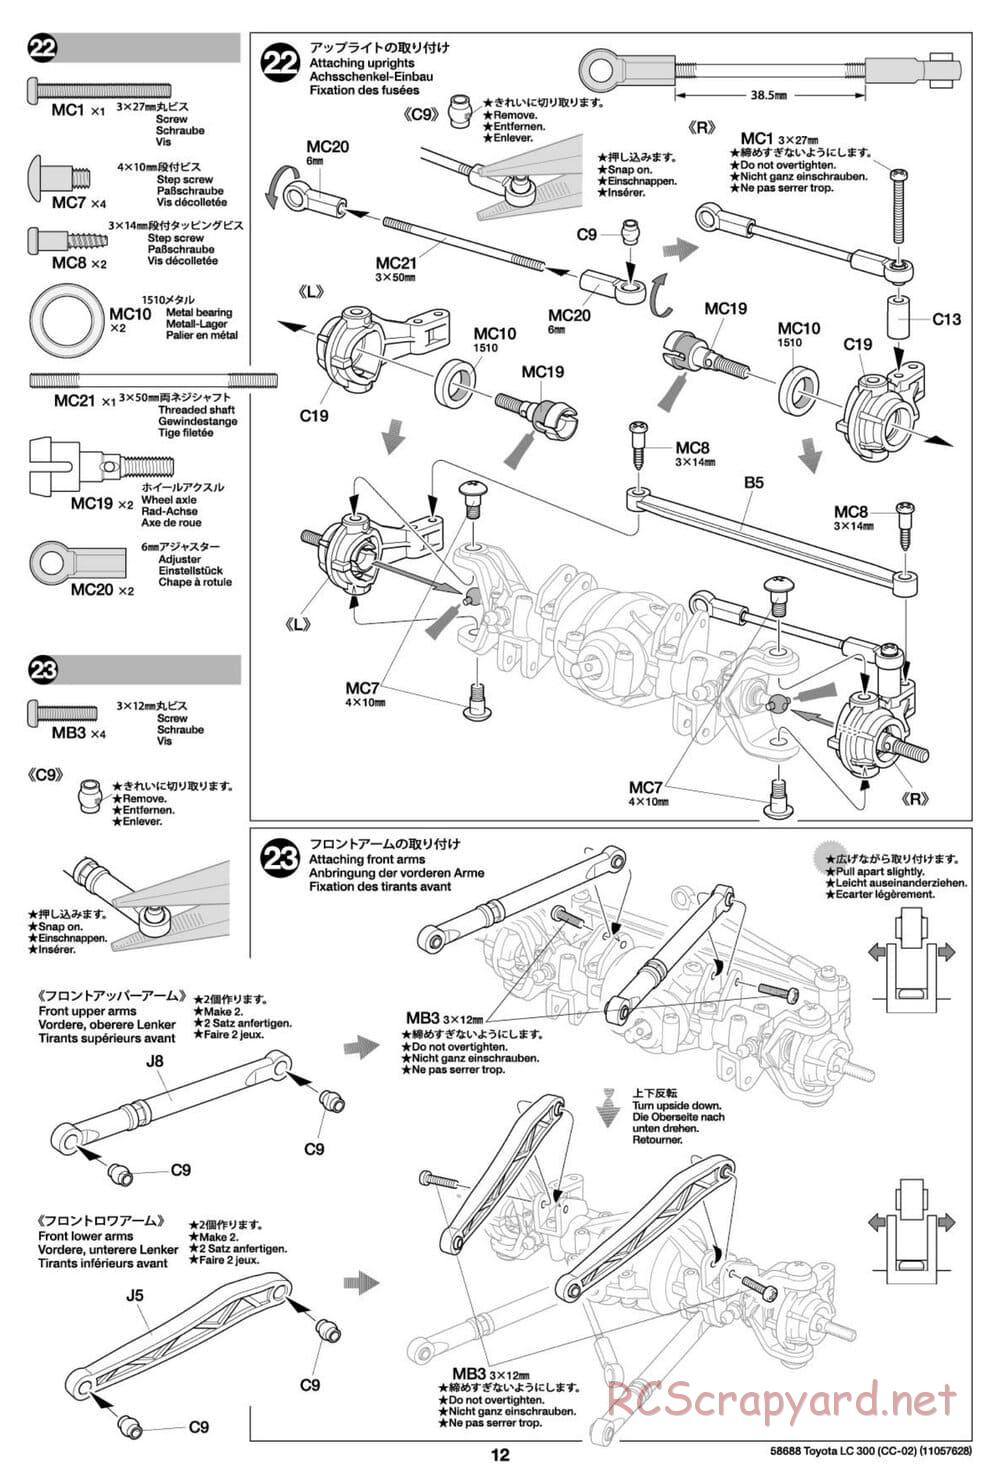 Tamiya - Toyota Land Cruiser 300 - CC-02 Chassis - Manual - Page 12